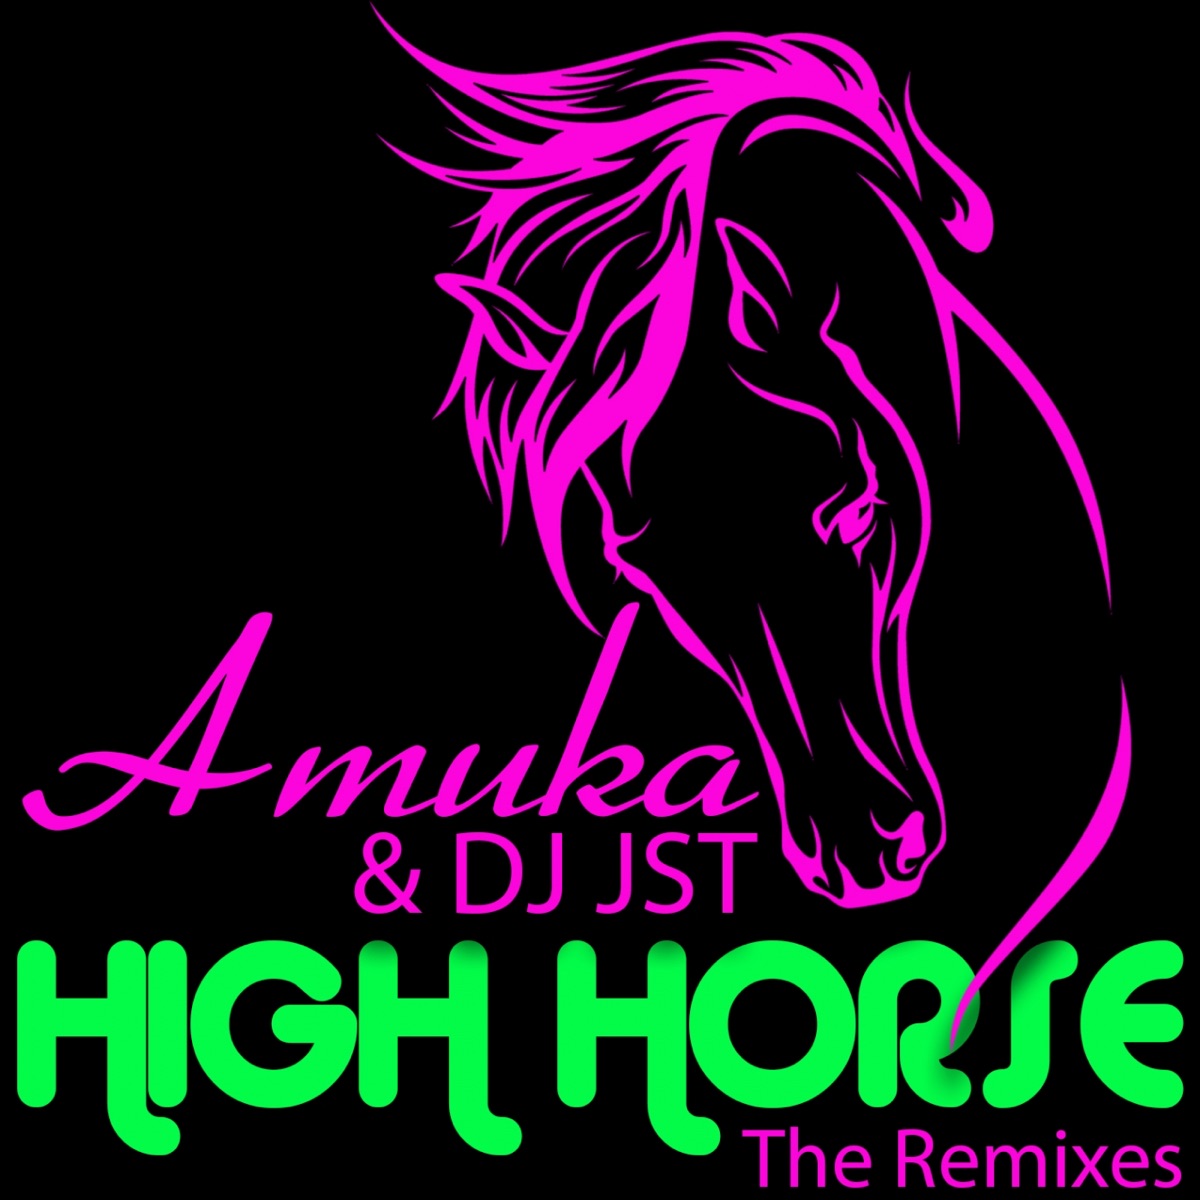 Amuka & DJ JST — High Horse cover artwork